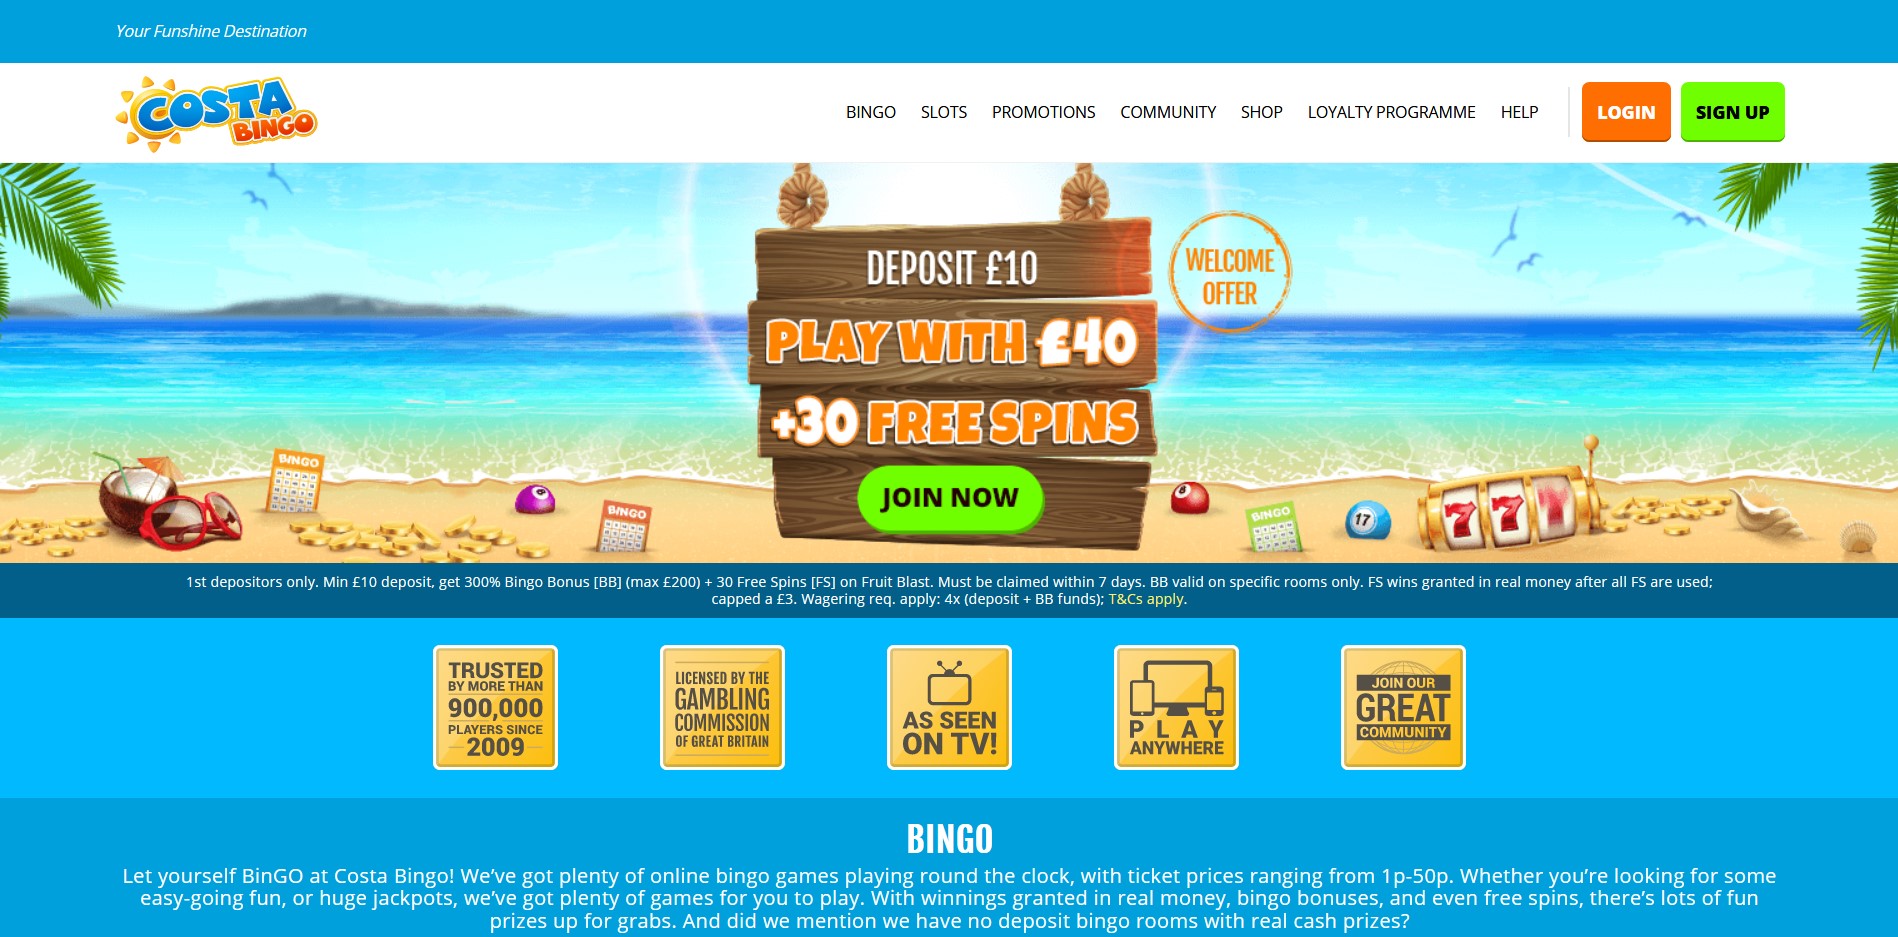 Costa Bingo Casino Review